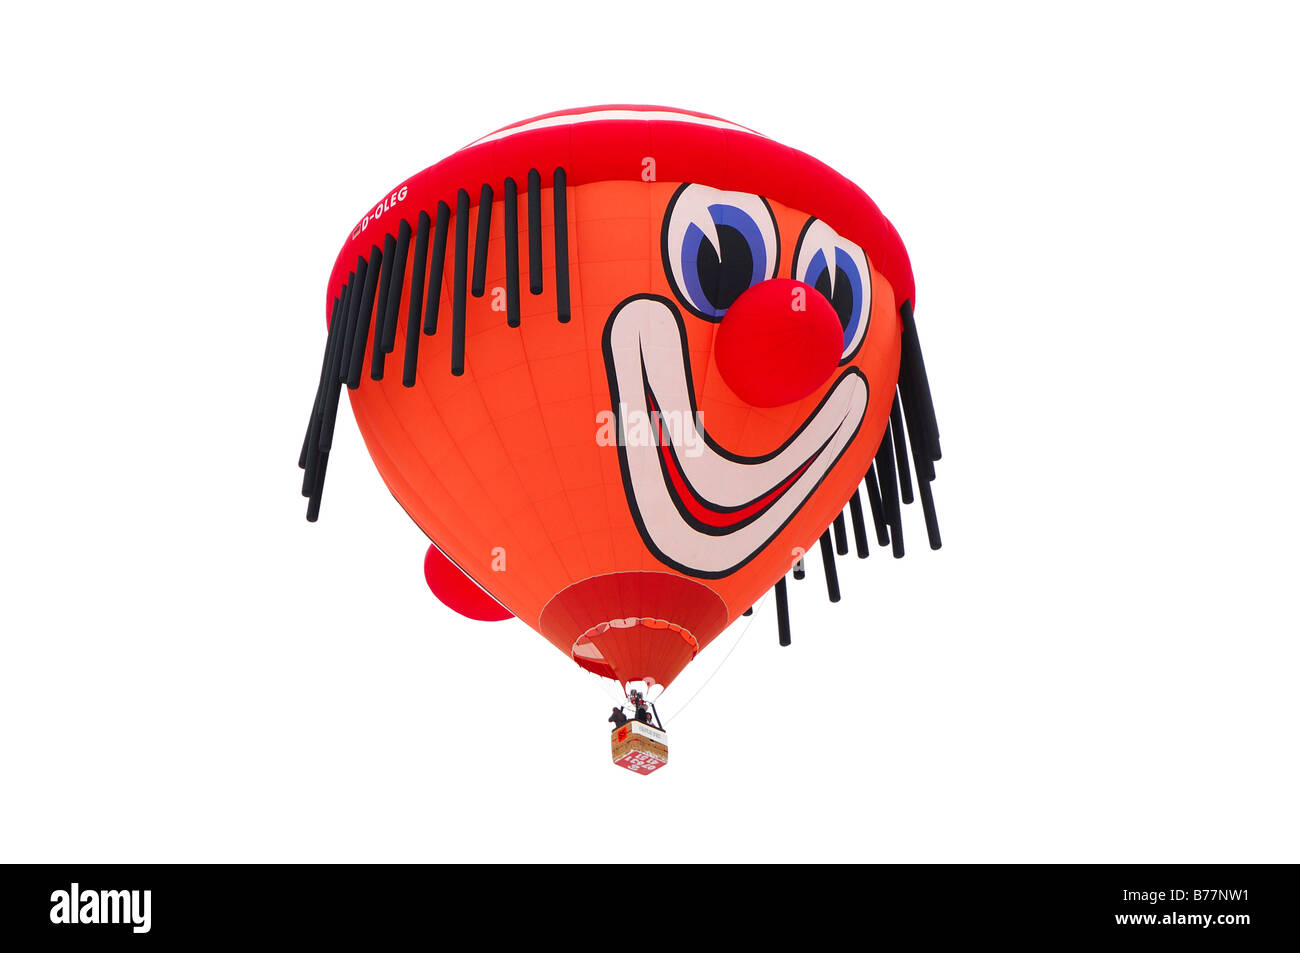 Heißluft-Ballon im Flug, spezielle Clown Form, Schroeder Fire Ballons Clown SS, Heißluftballon, International Ballon Festiv Stockfoto